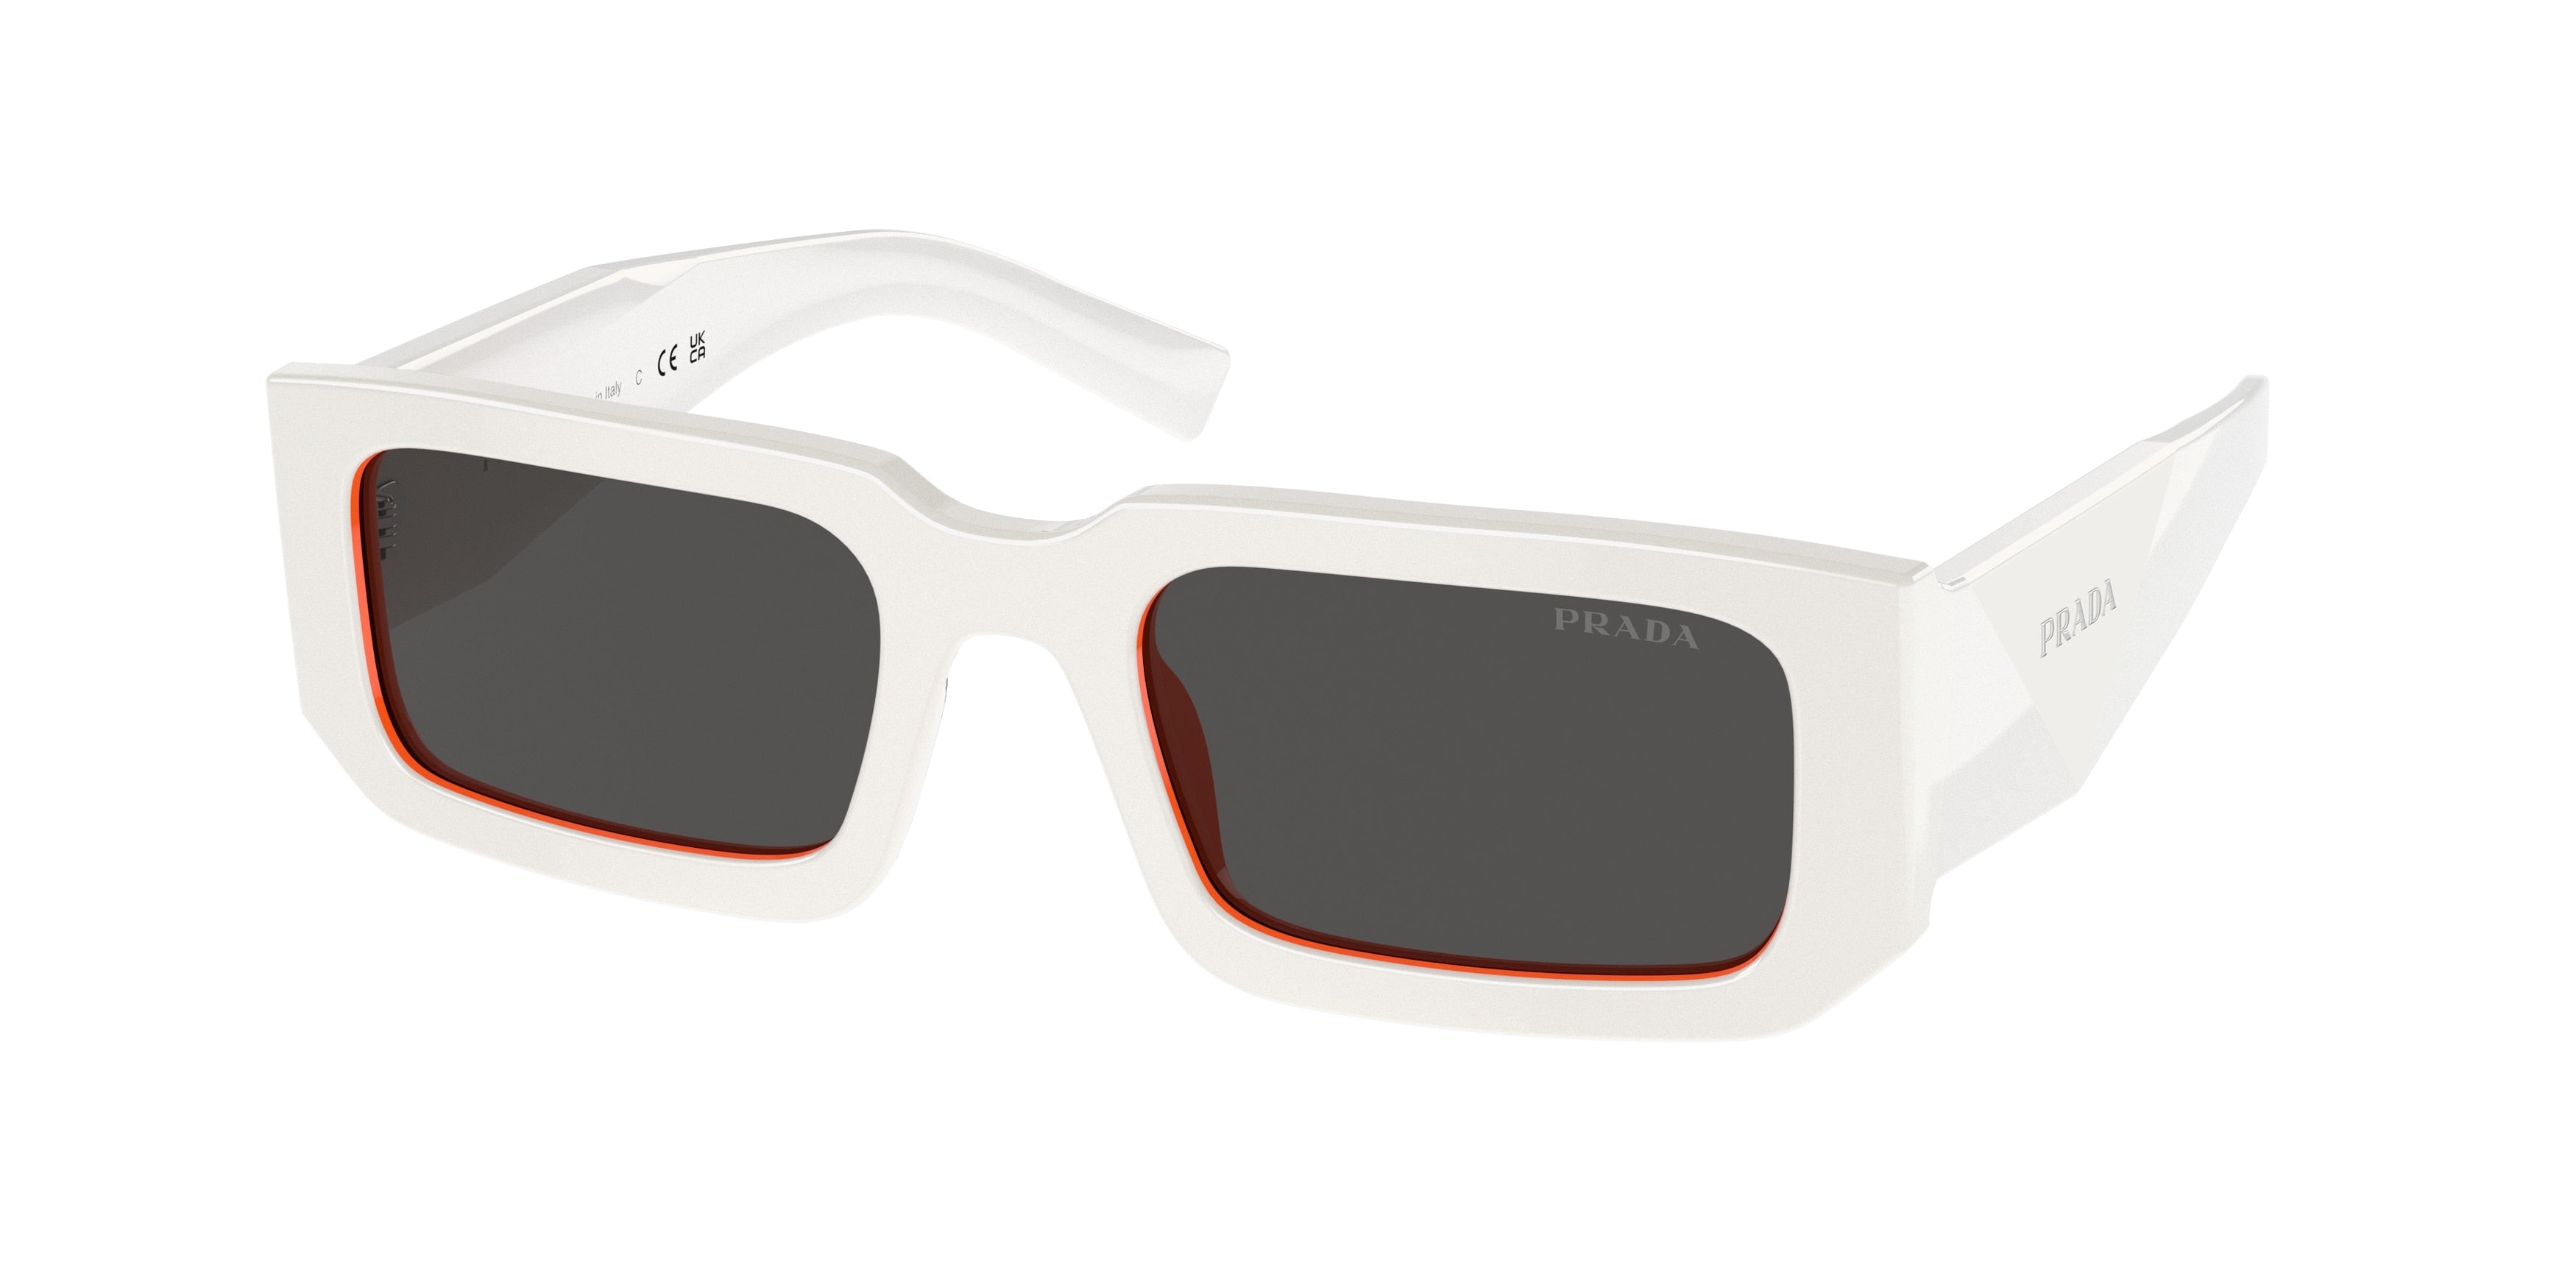 Prada Glossy White Sunglasses By Malukks - The Epitome Of Luxury!